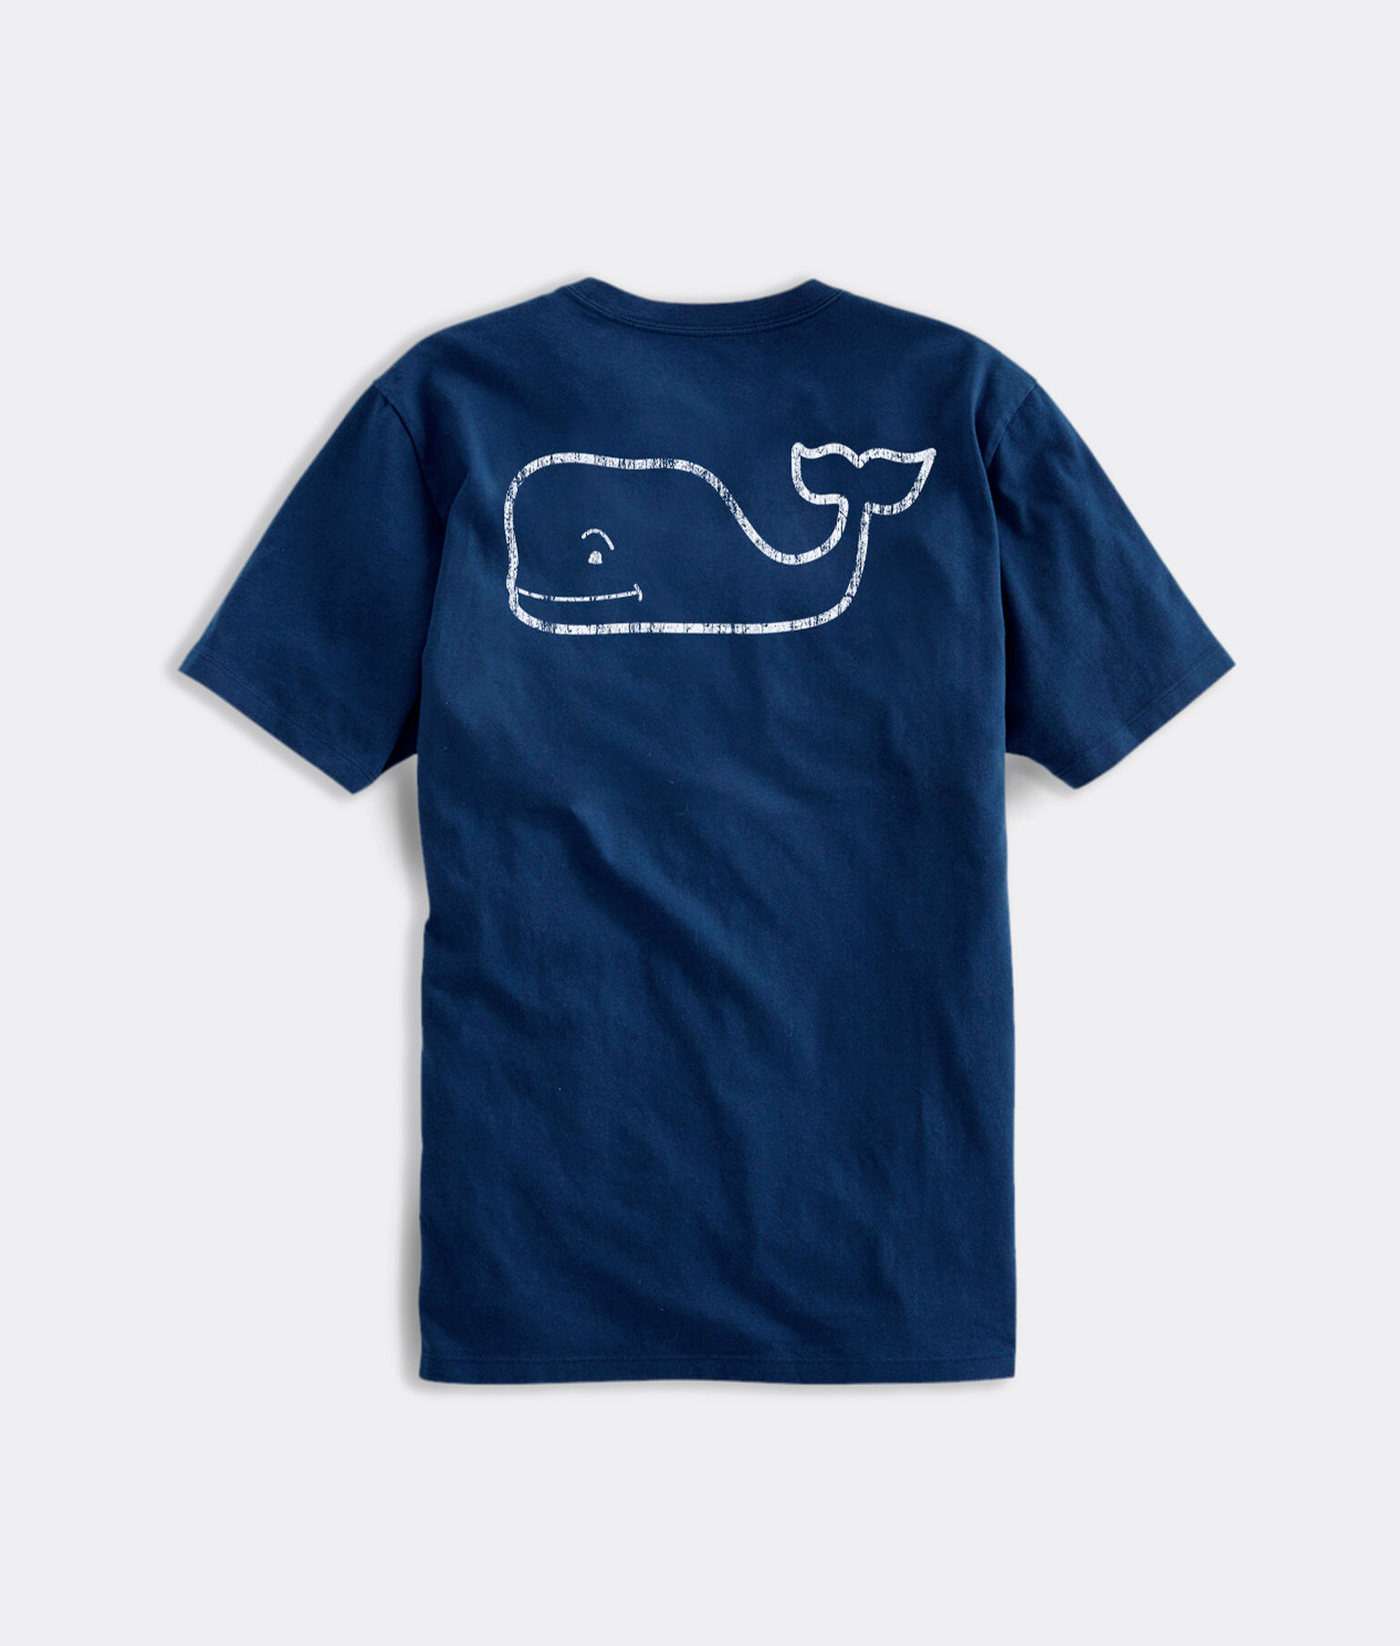 Vineyard Vines Men's Short Sleeve Vintage Whale Pocket T-Shirt, Blue Blazer, Medium